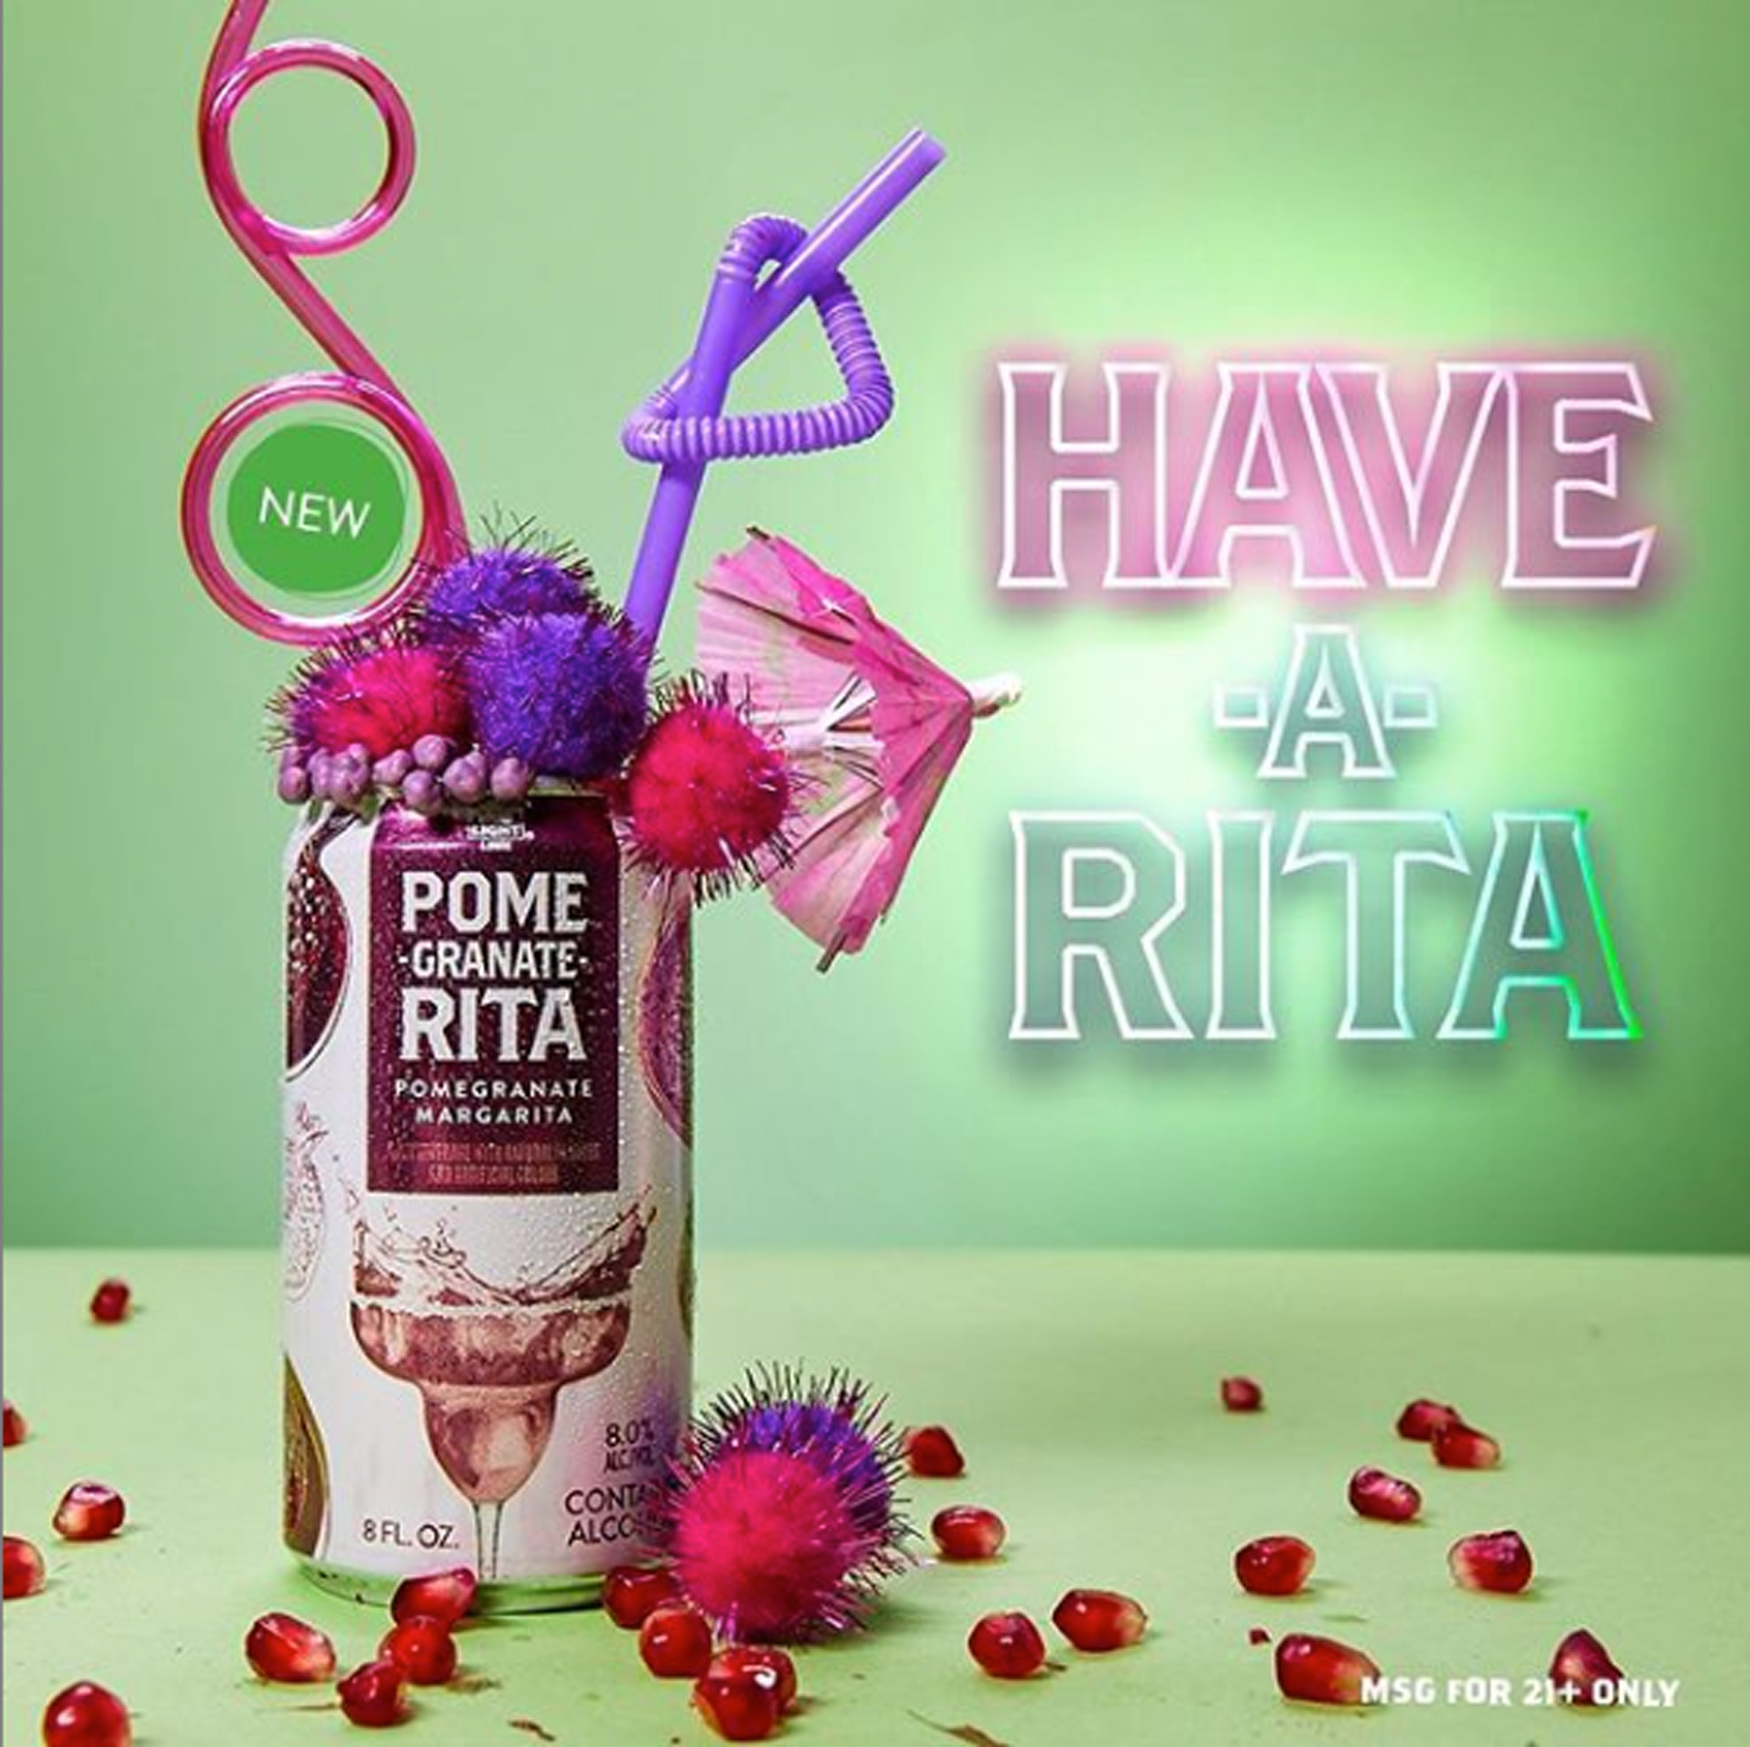 Rita-website